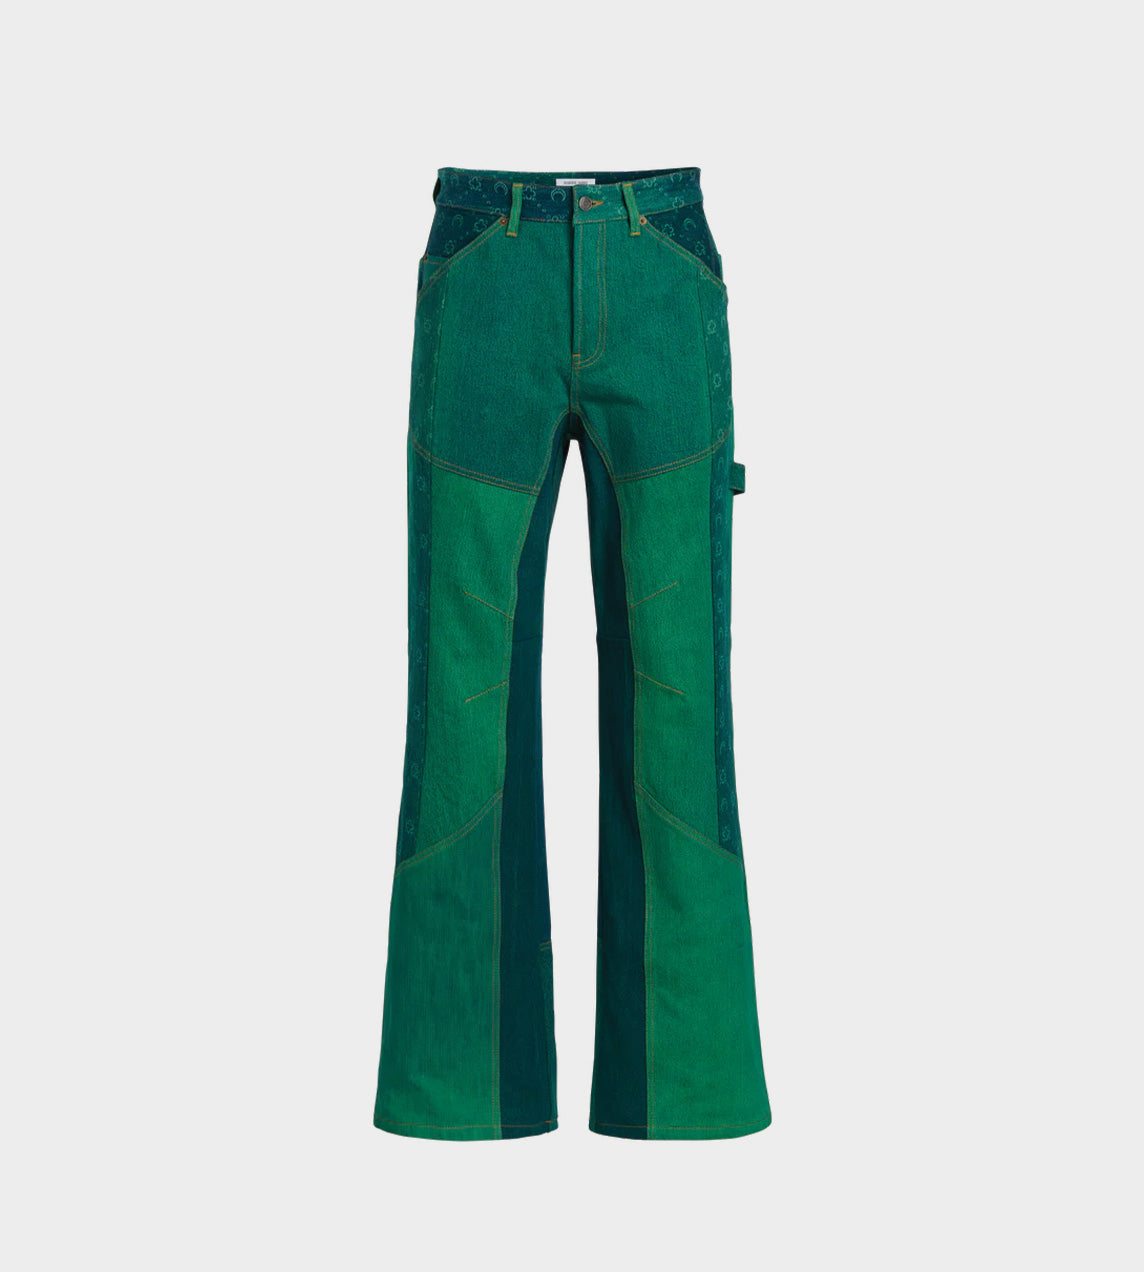 Marine Serre - REGEN Denim Jeans Bright Green